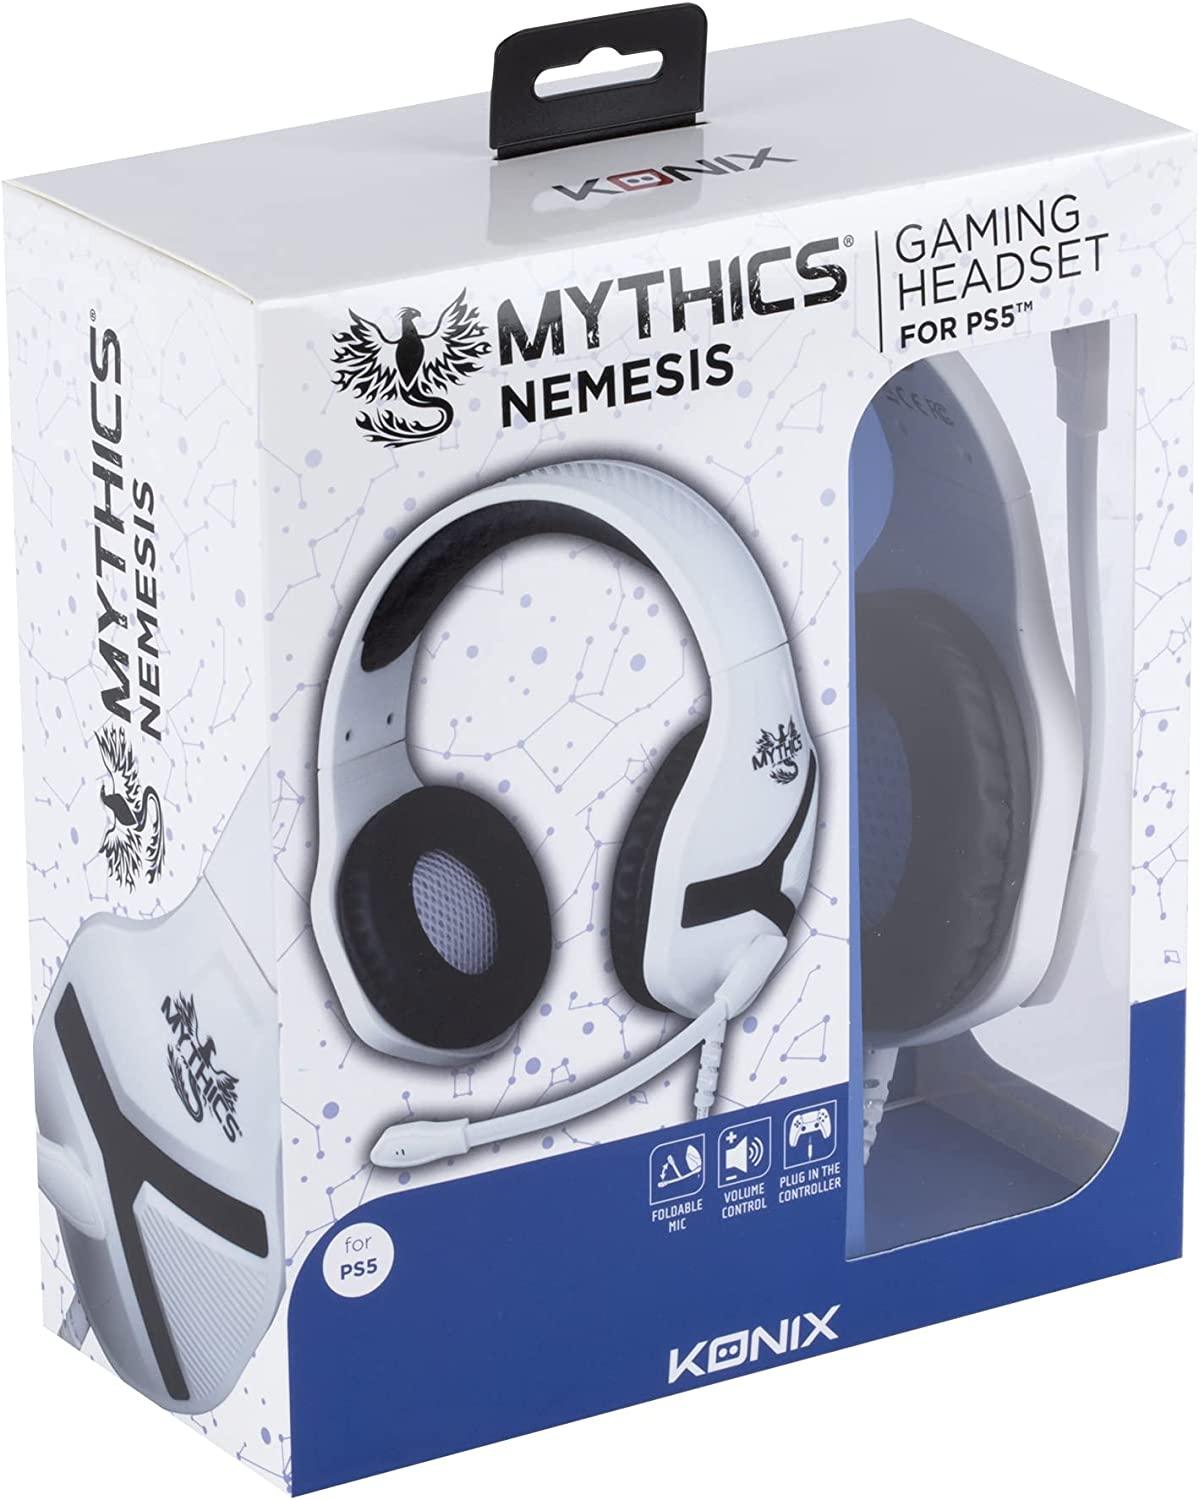 Konix Nemesis Gaming Headset for PS5 - GameStore.mt | Powered by Flutisat